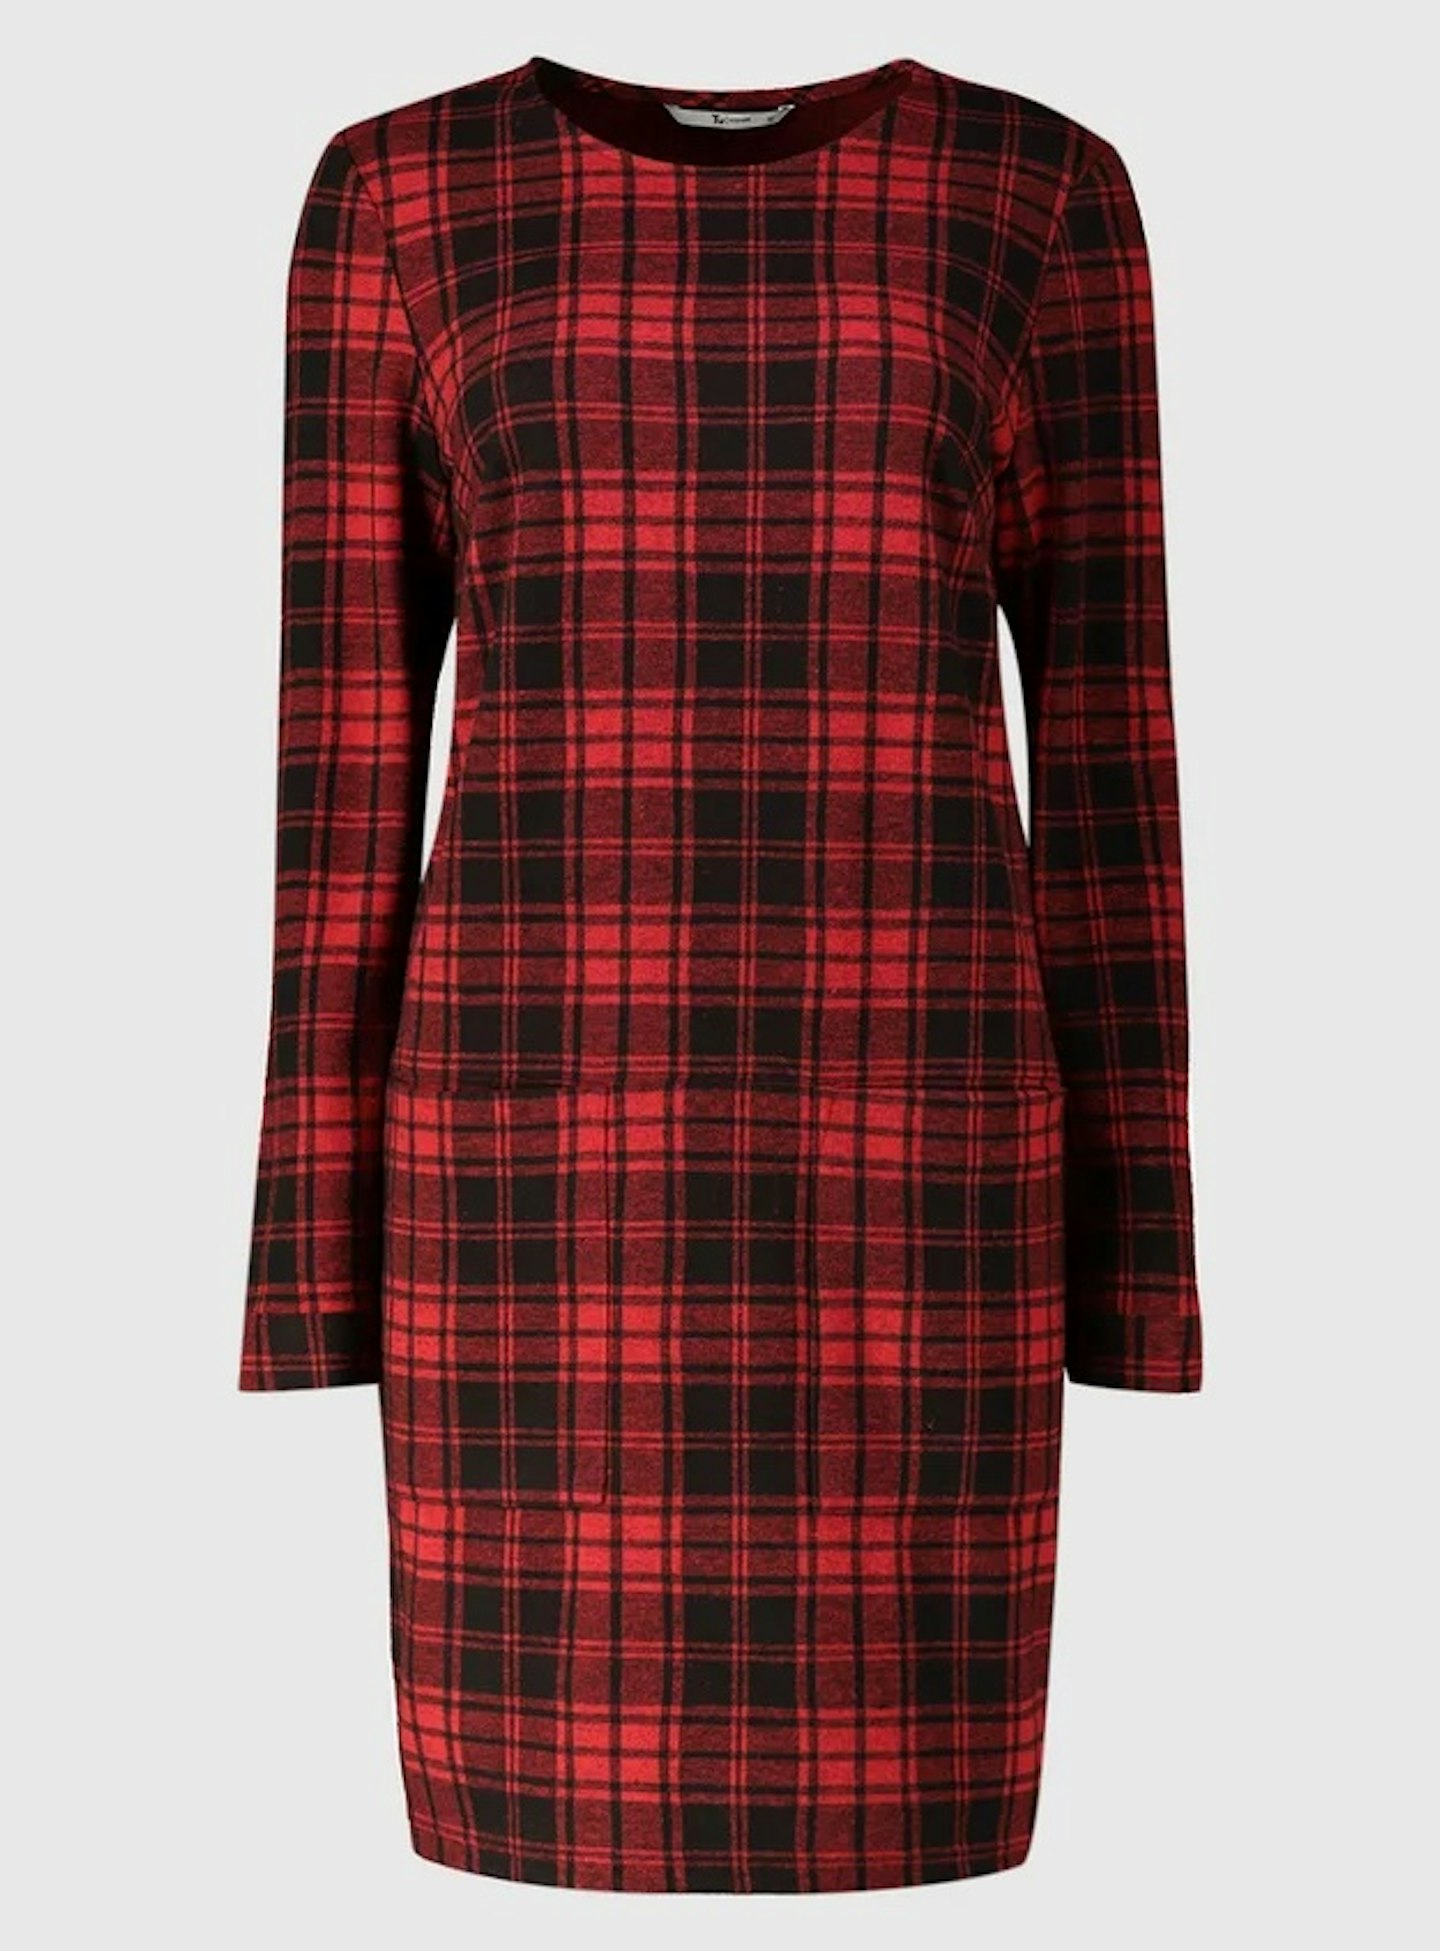 Red Plaid Dress, £16